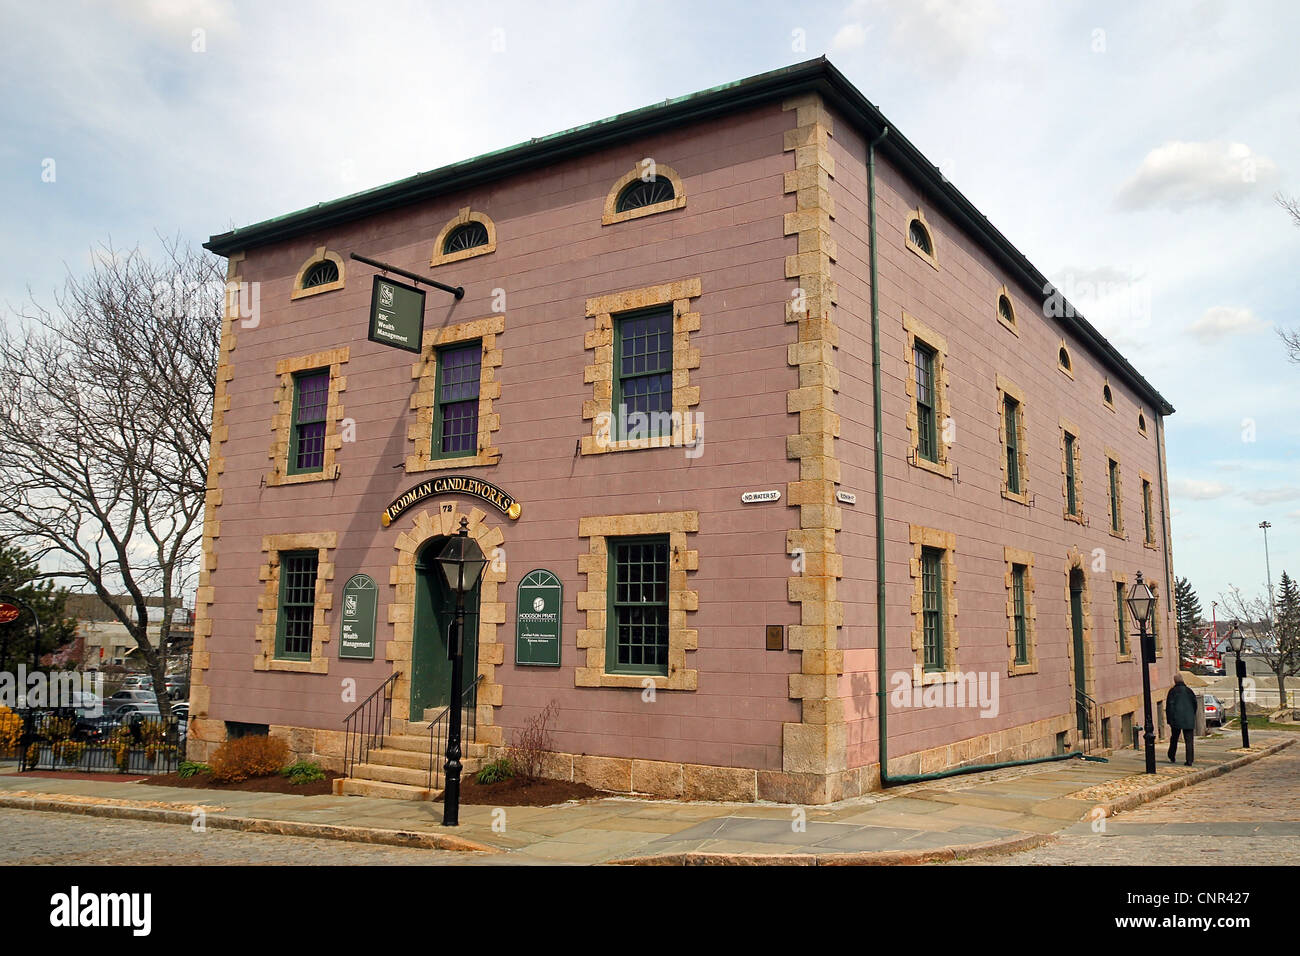 Rodman Candleworks, New Bedford Distrito Histórico Foto de stock